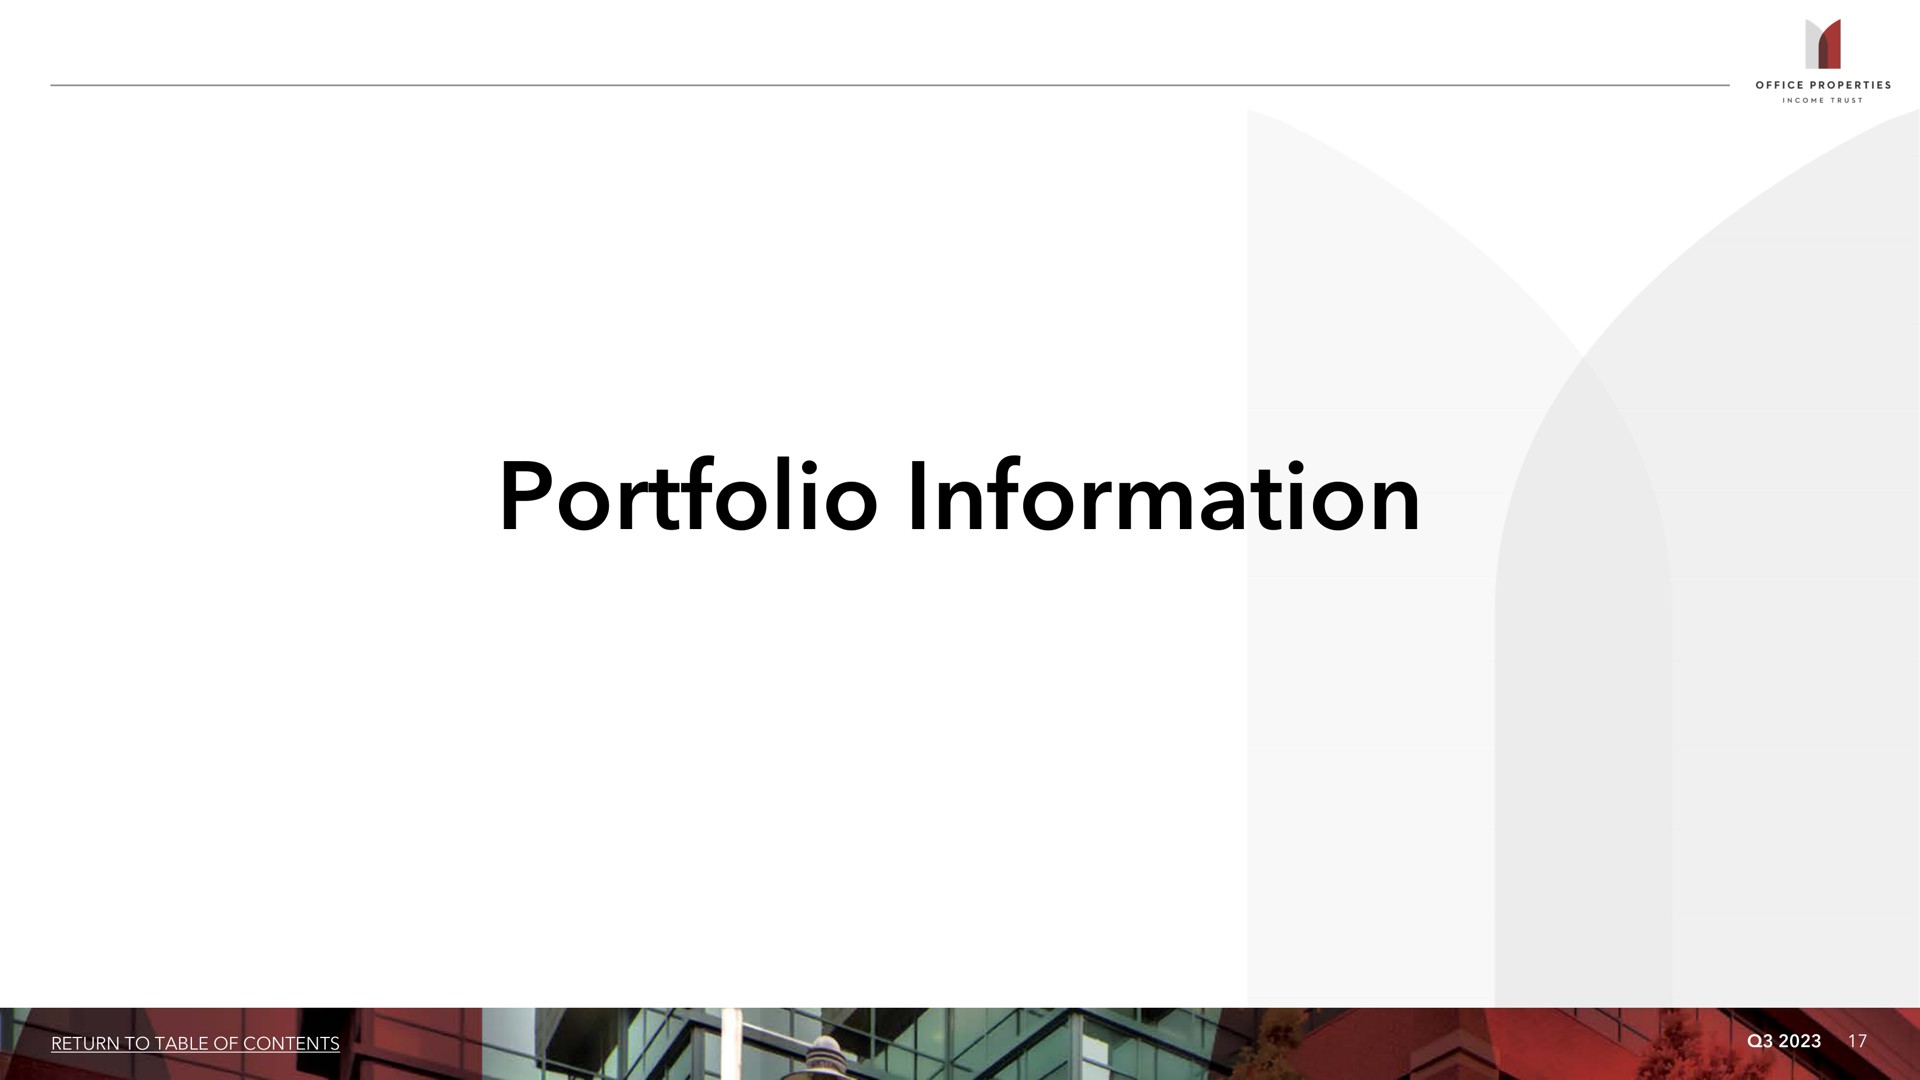 portfolio information | Office Properties Income Trust